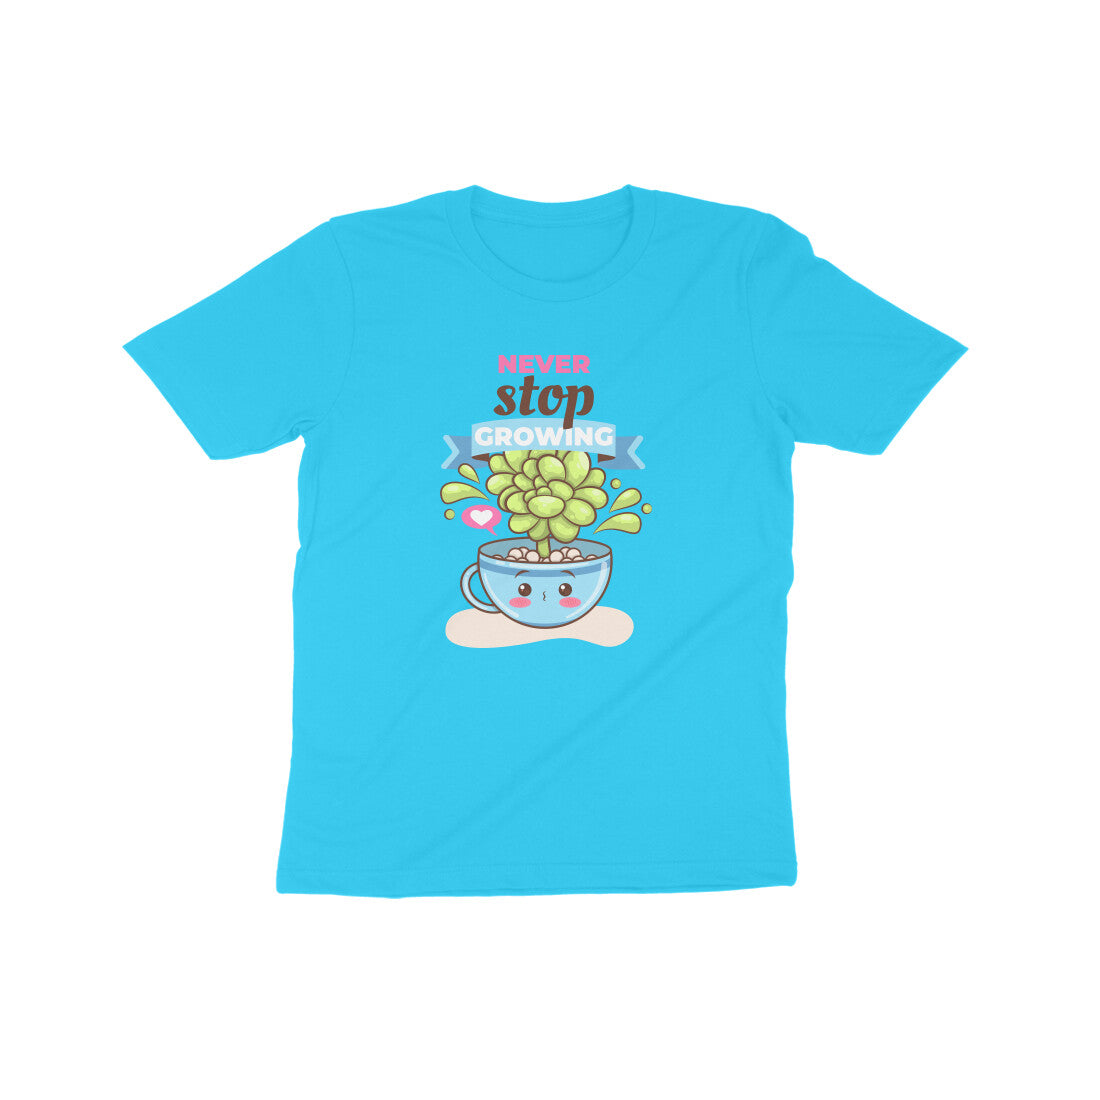 Never Stop Growing Kids T-Shirt